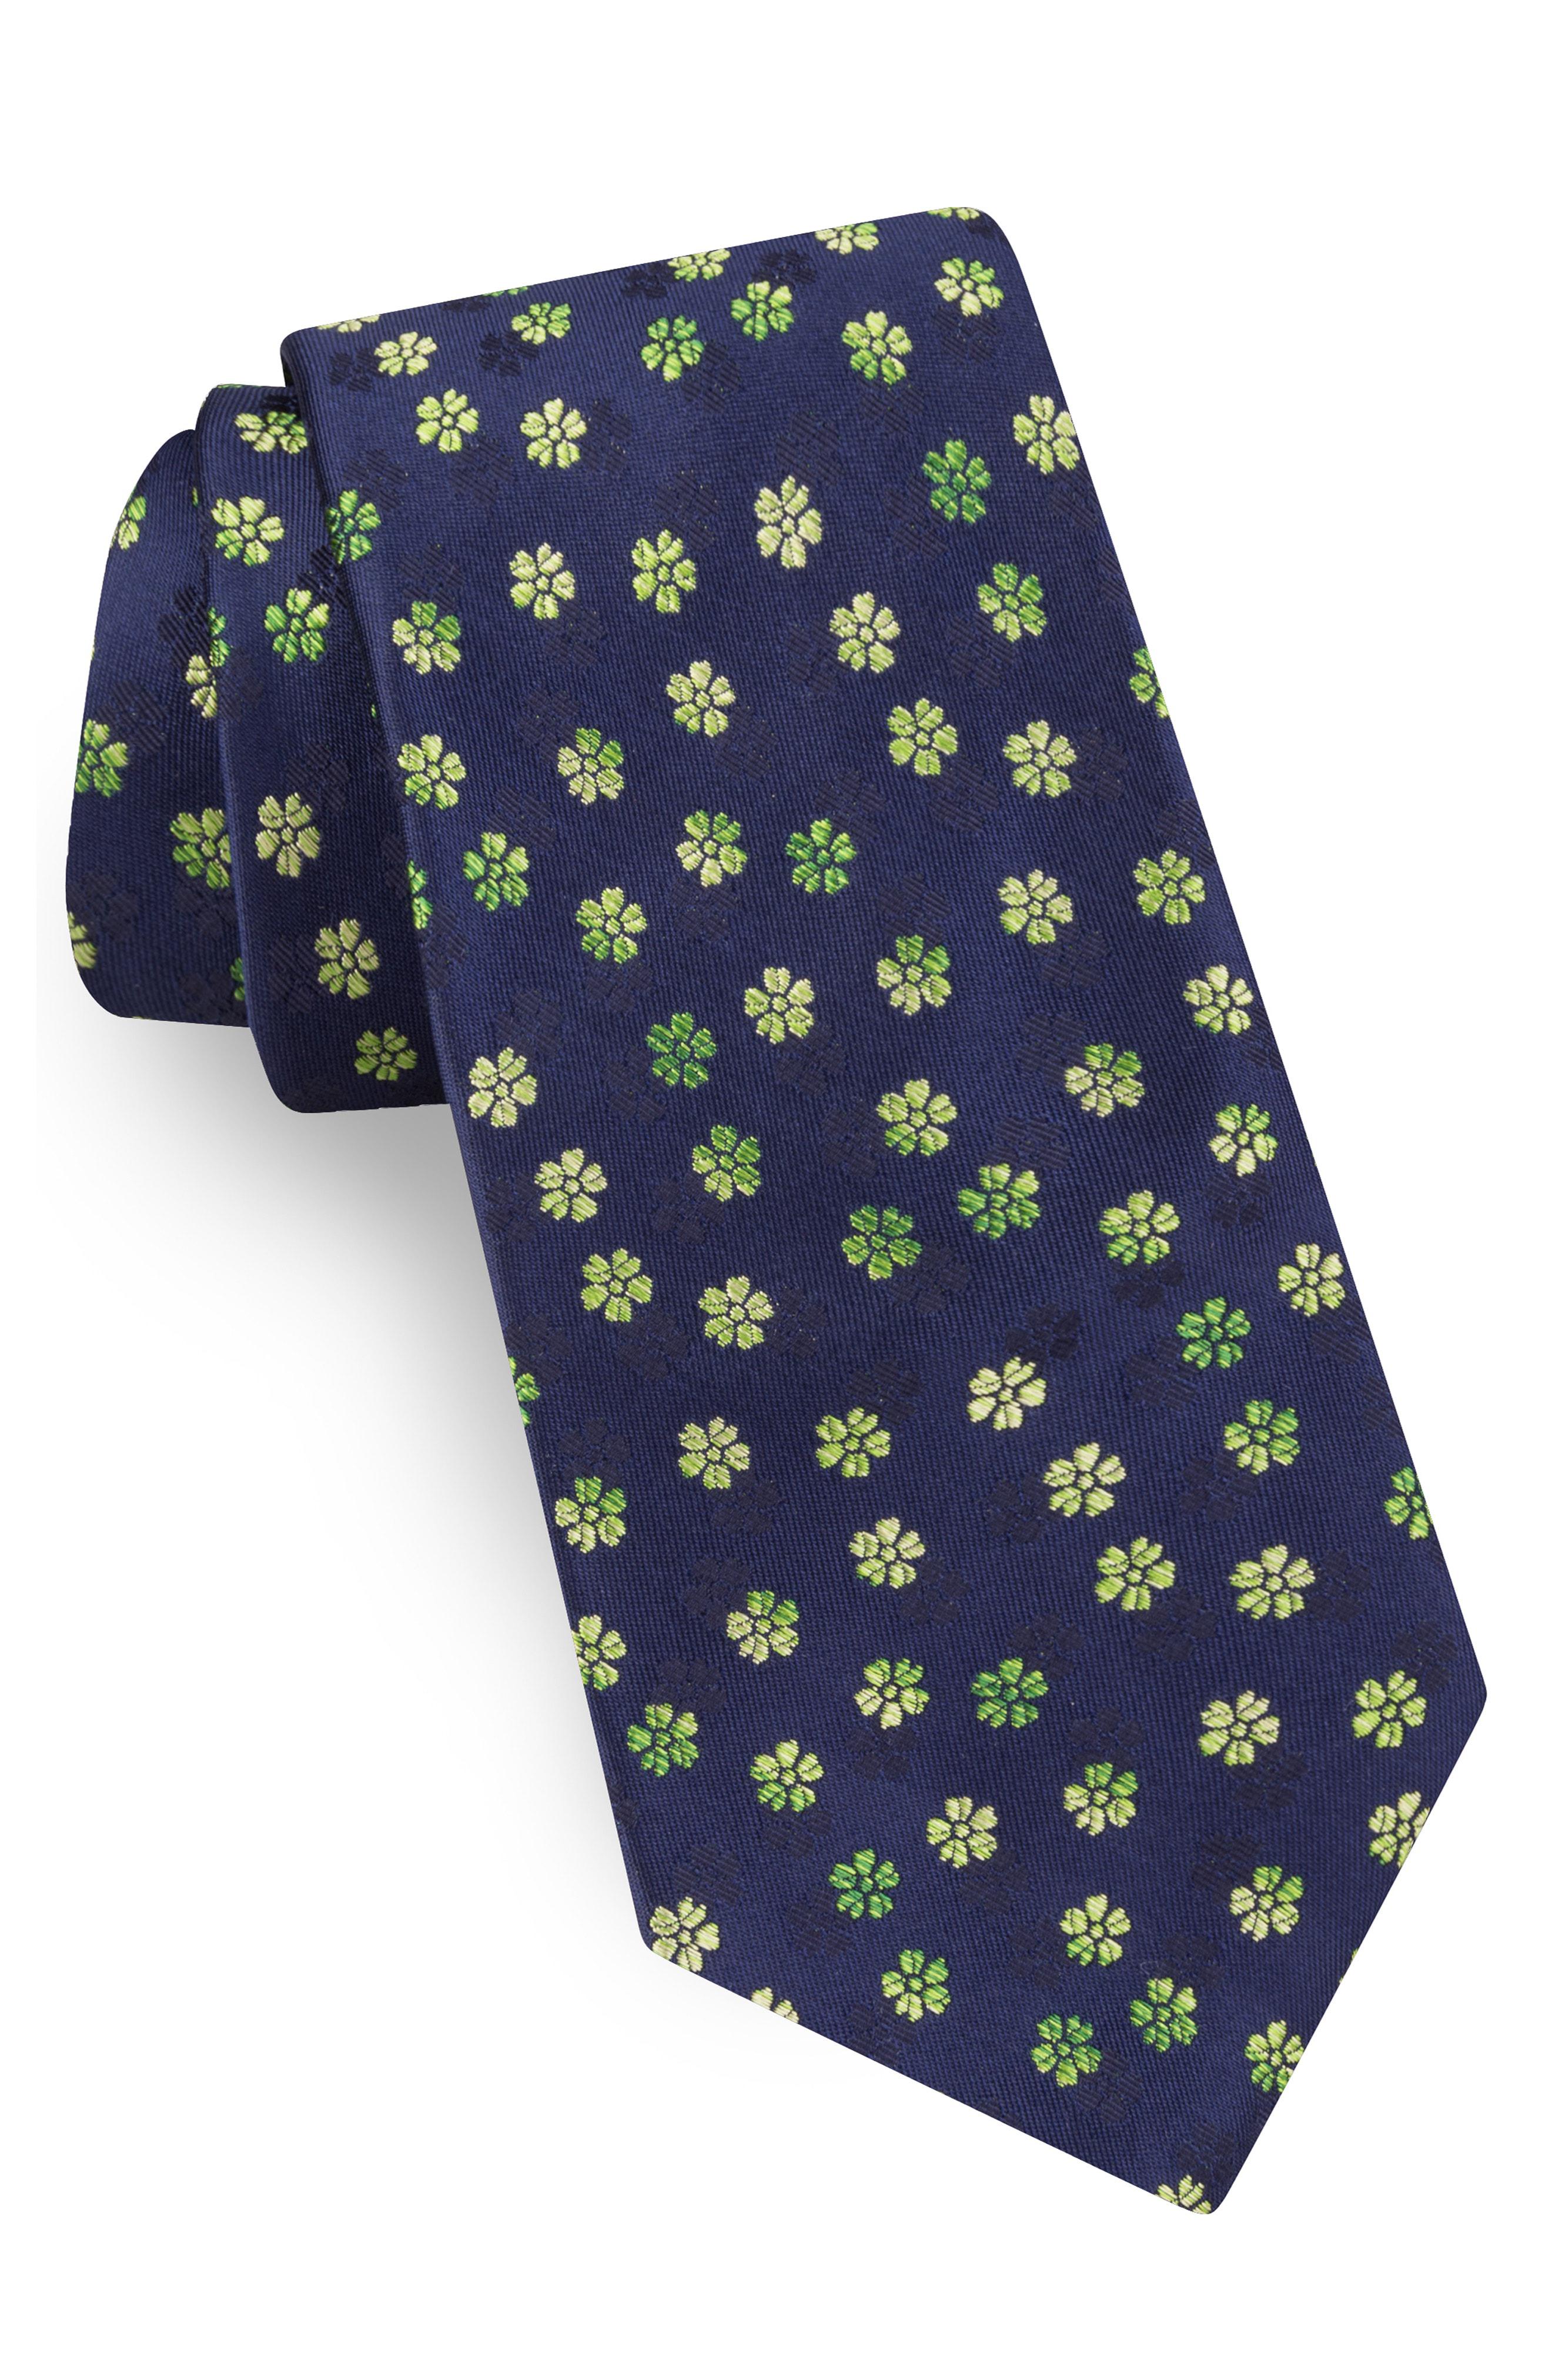 Ted Baker Flower Silk Tie in Blue for Men - Lyst